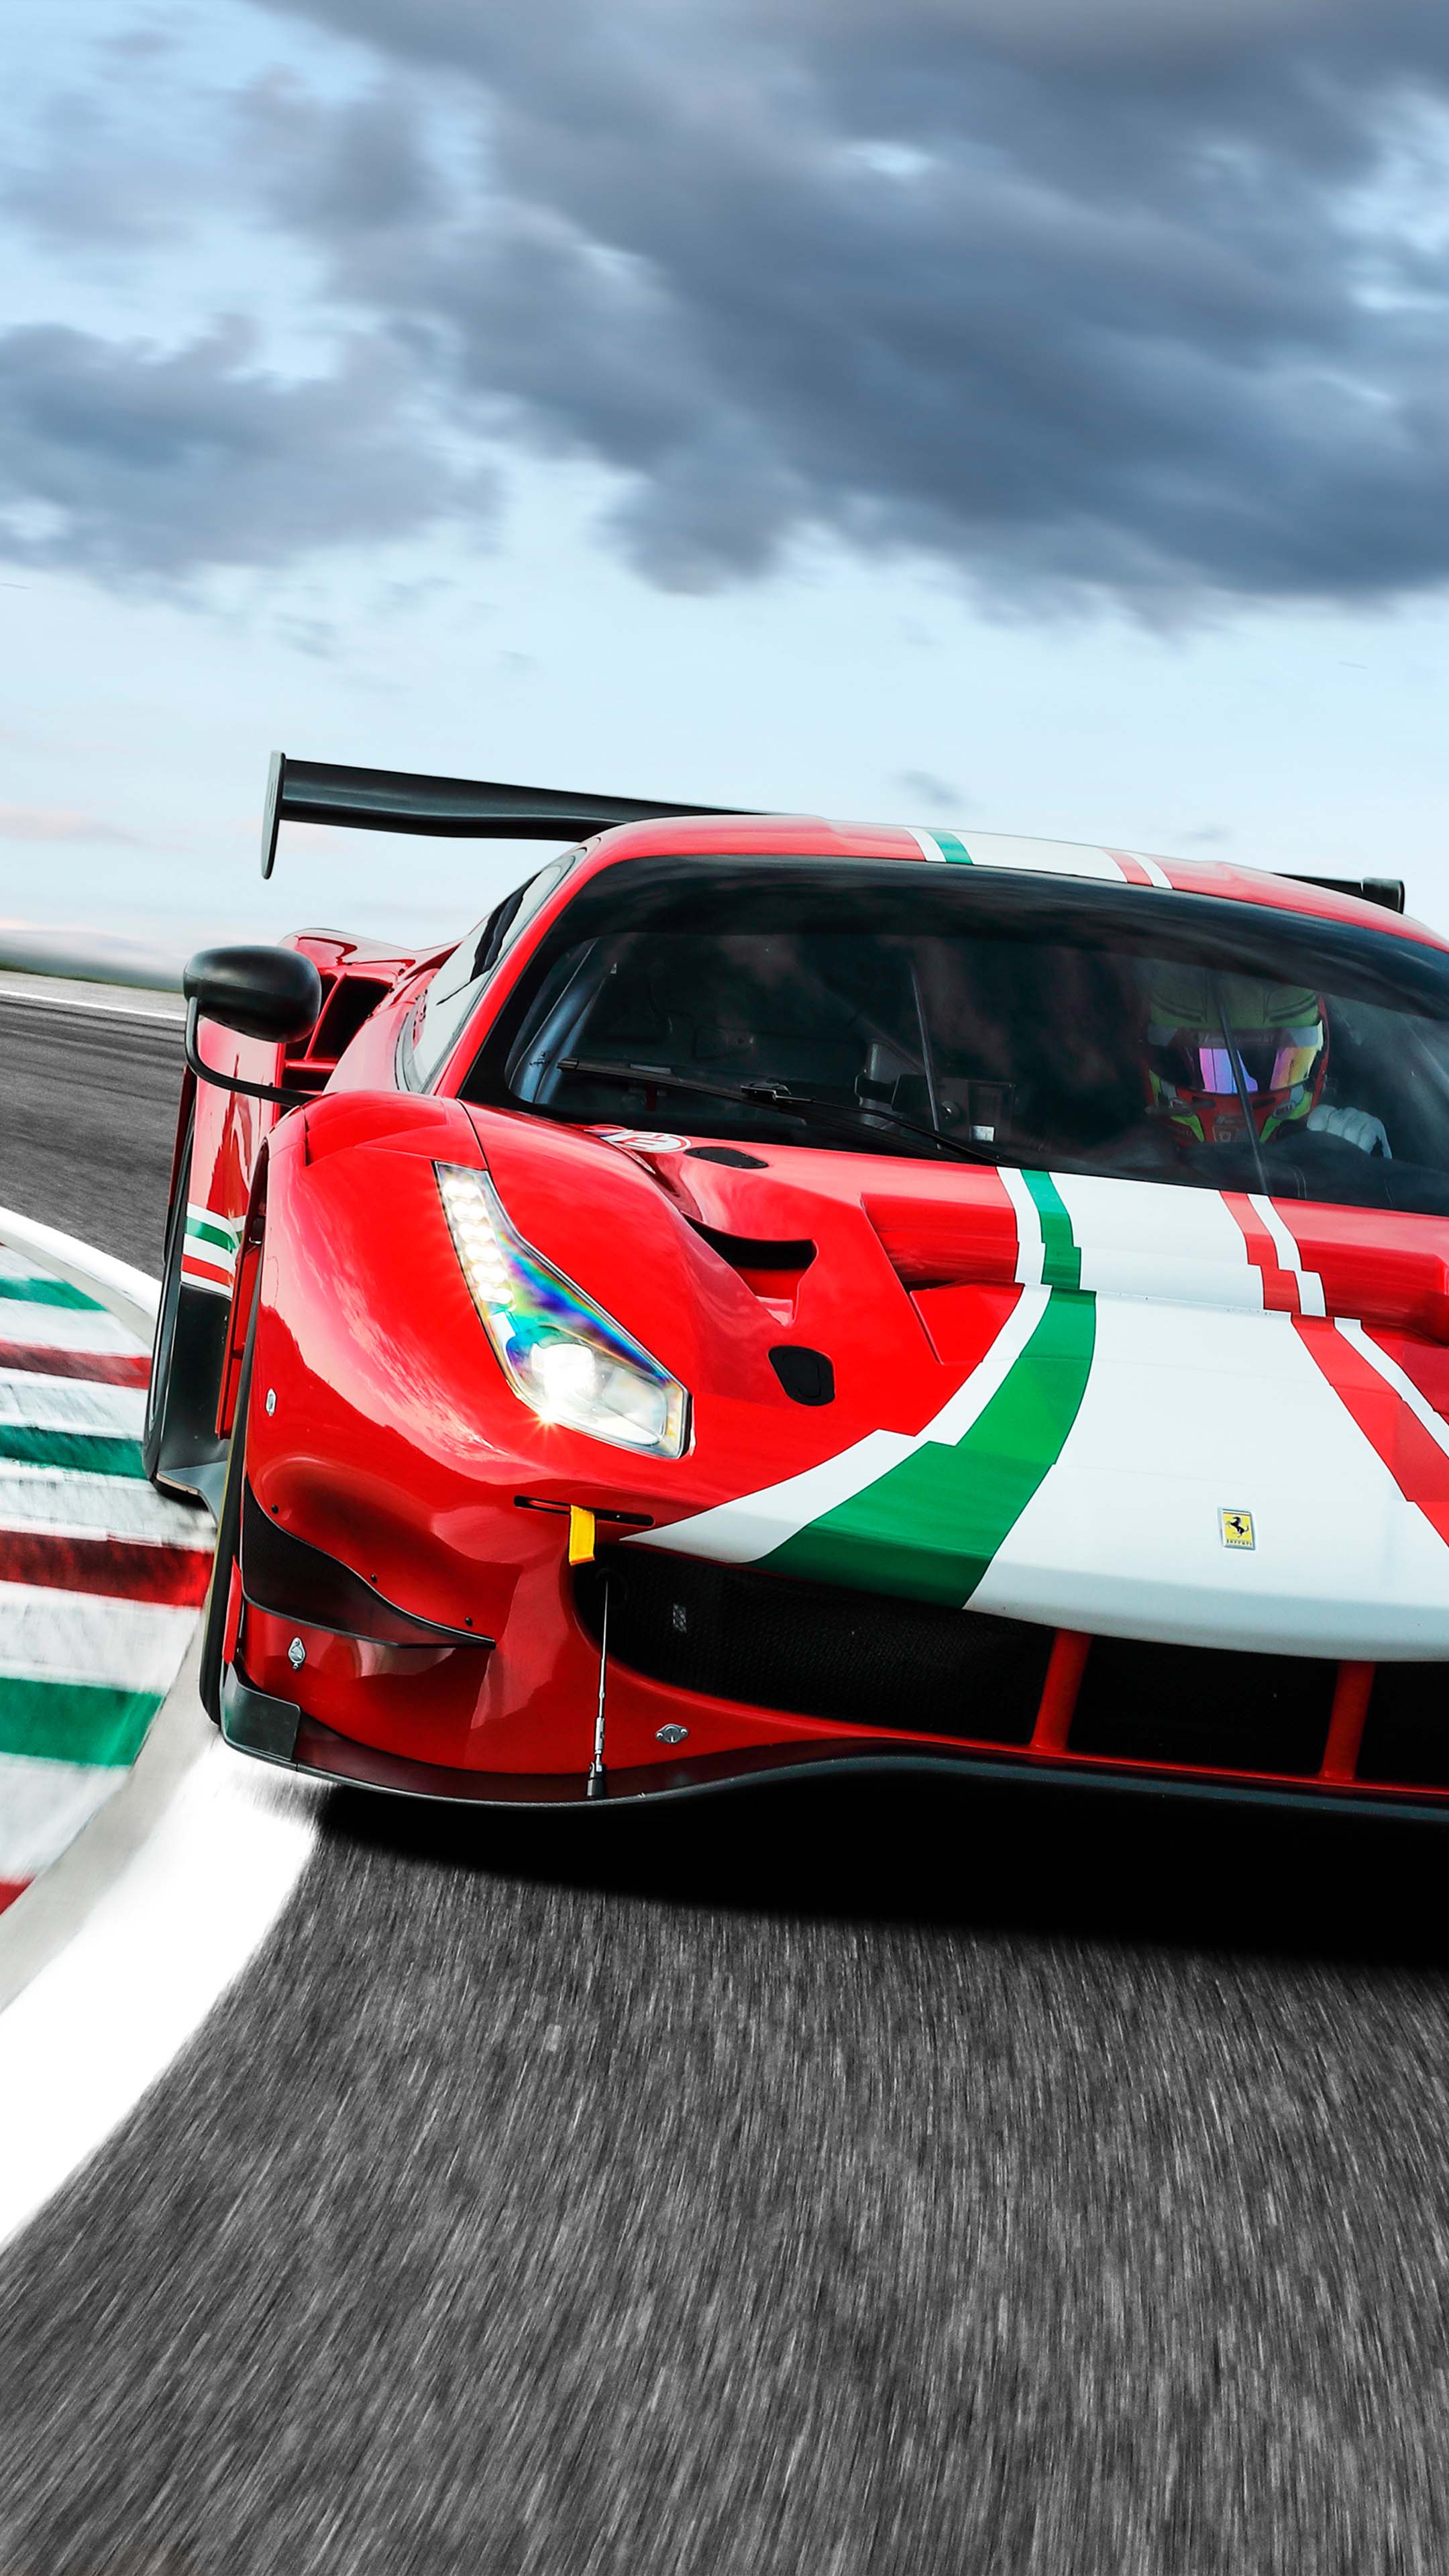 Ferrari Wallpaper Images - Free Download on Freepik